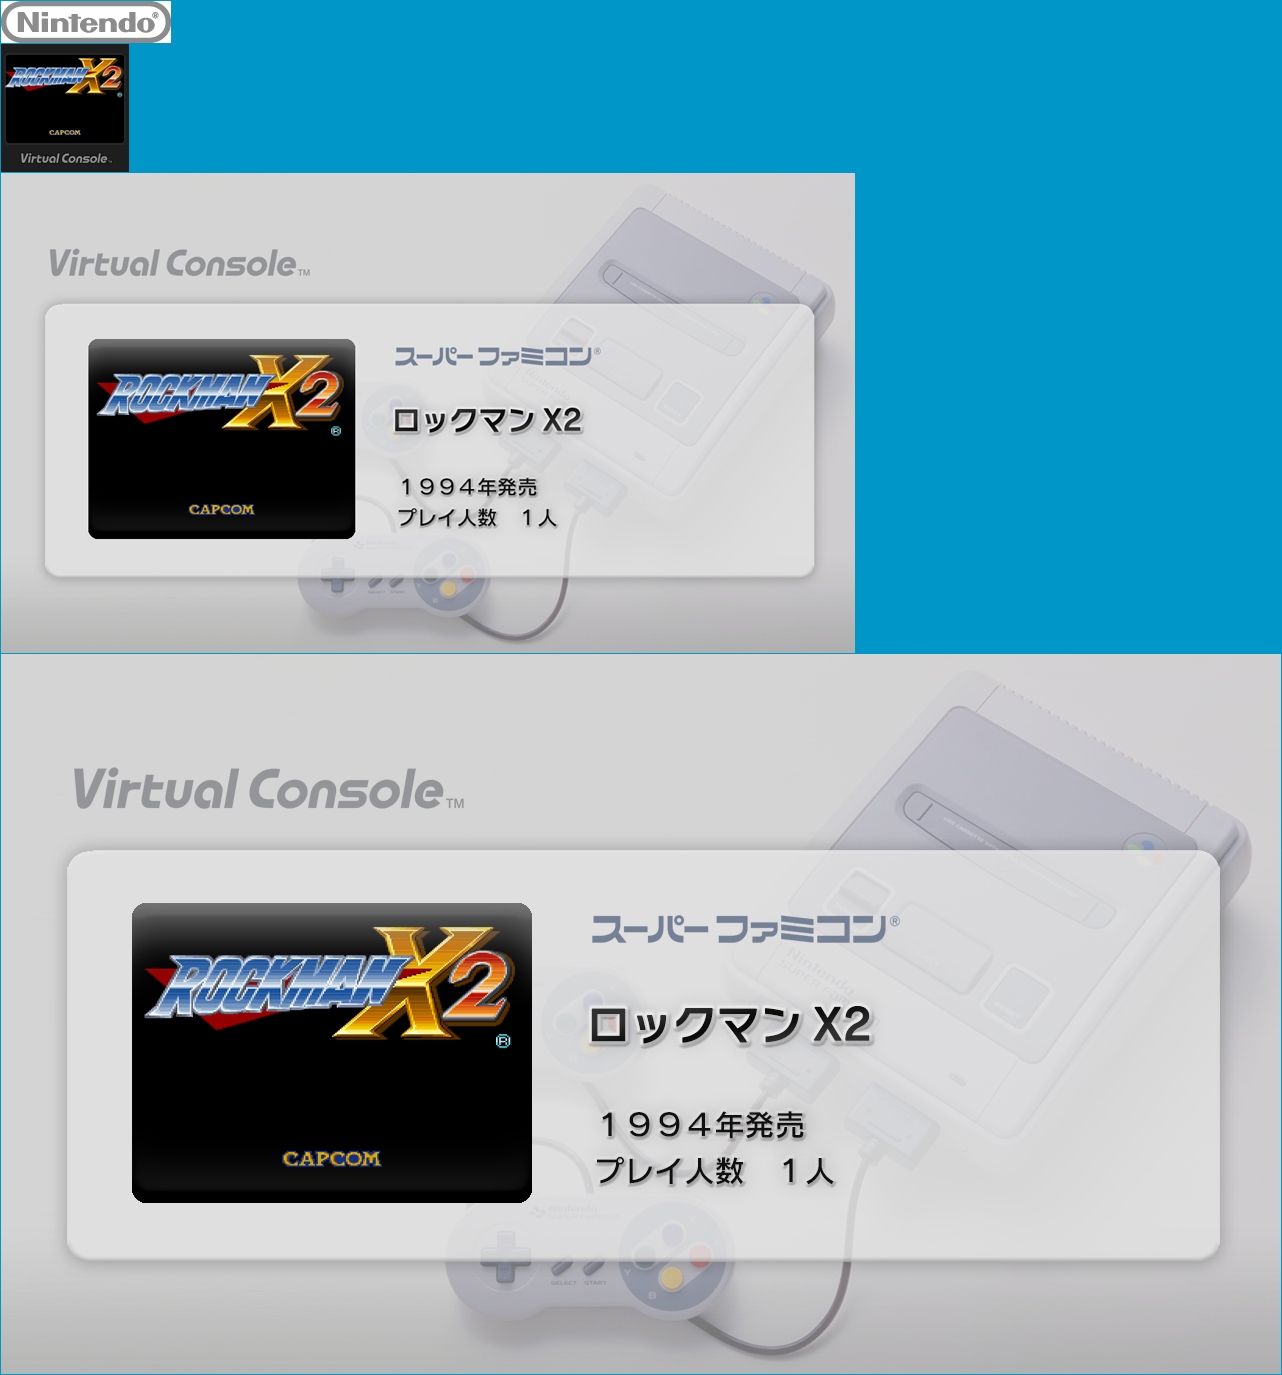 Virtual Console - Rockman X2